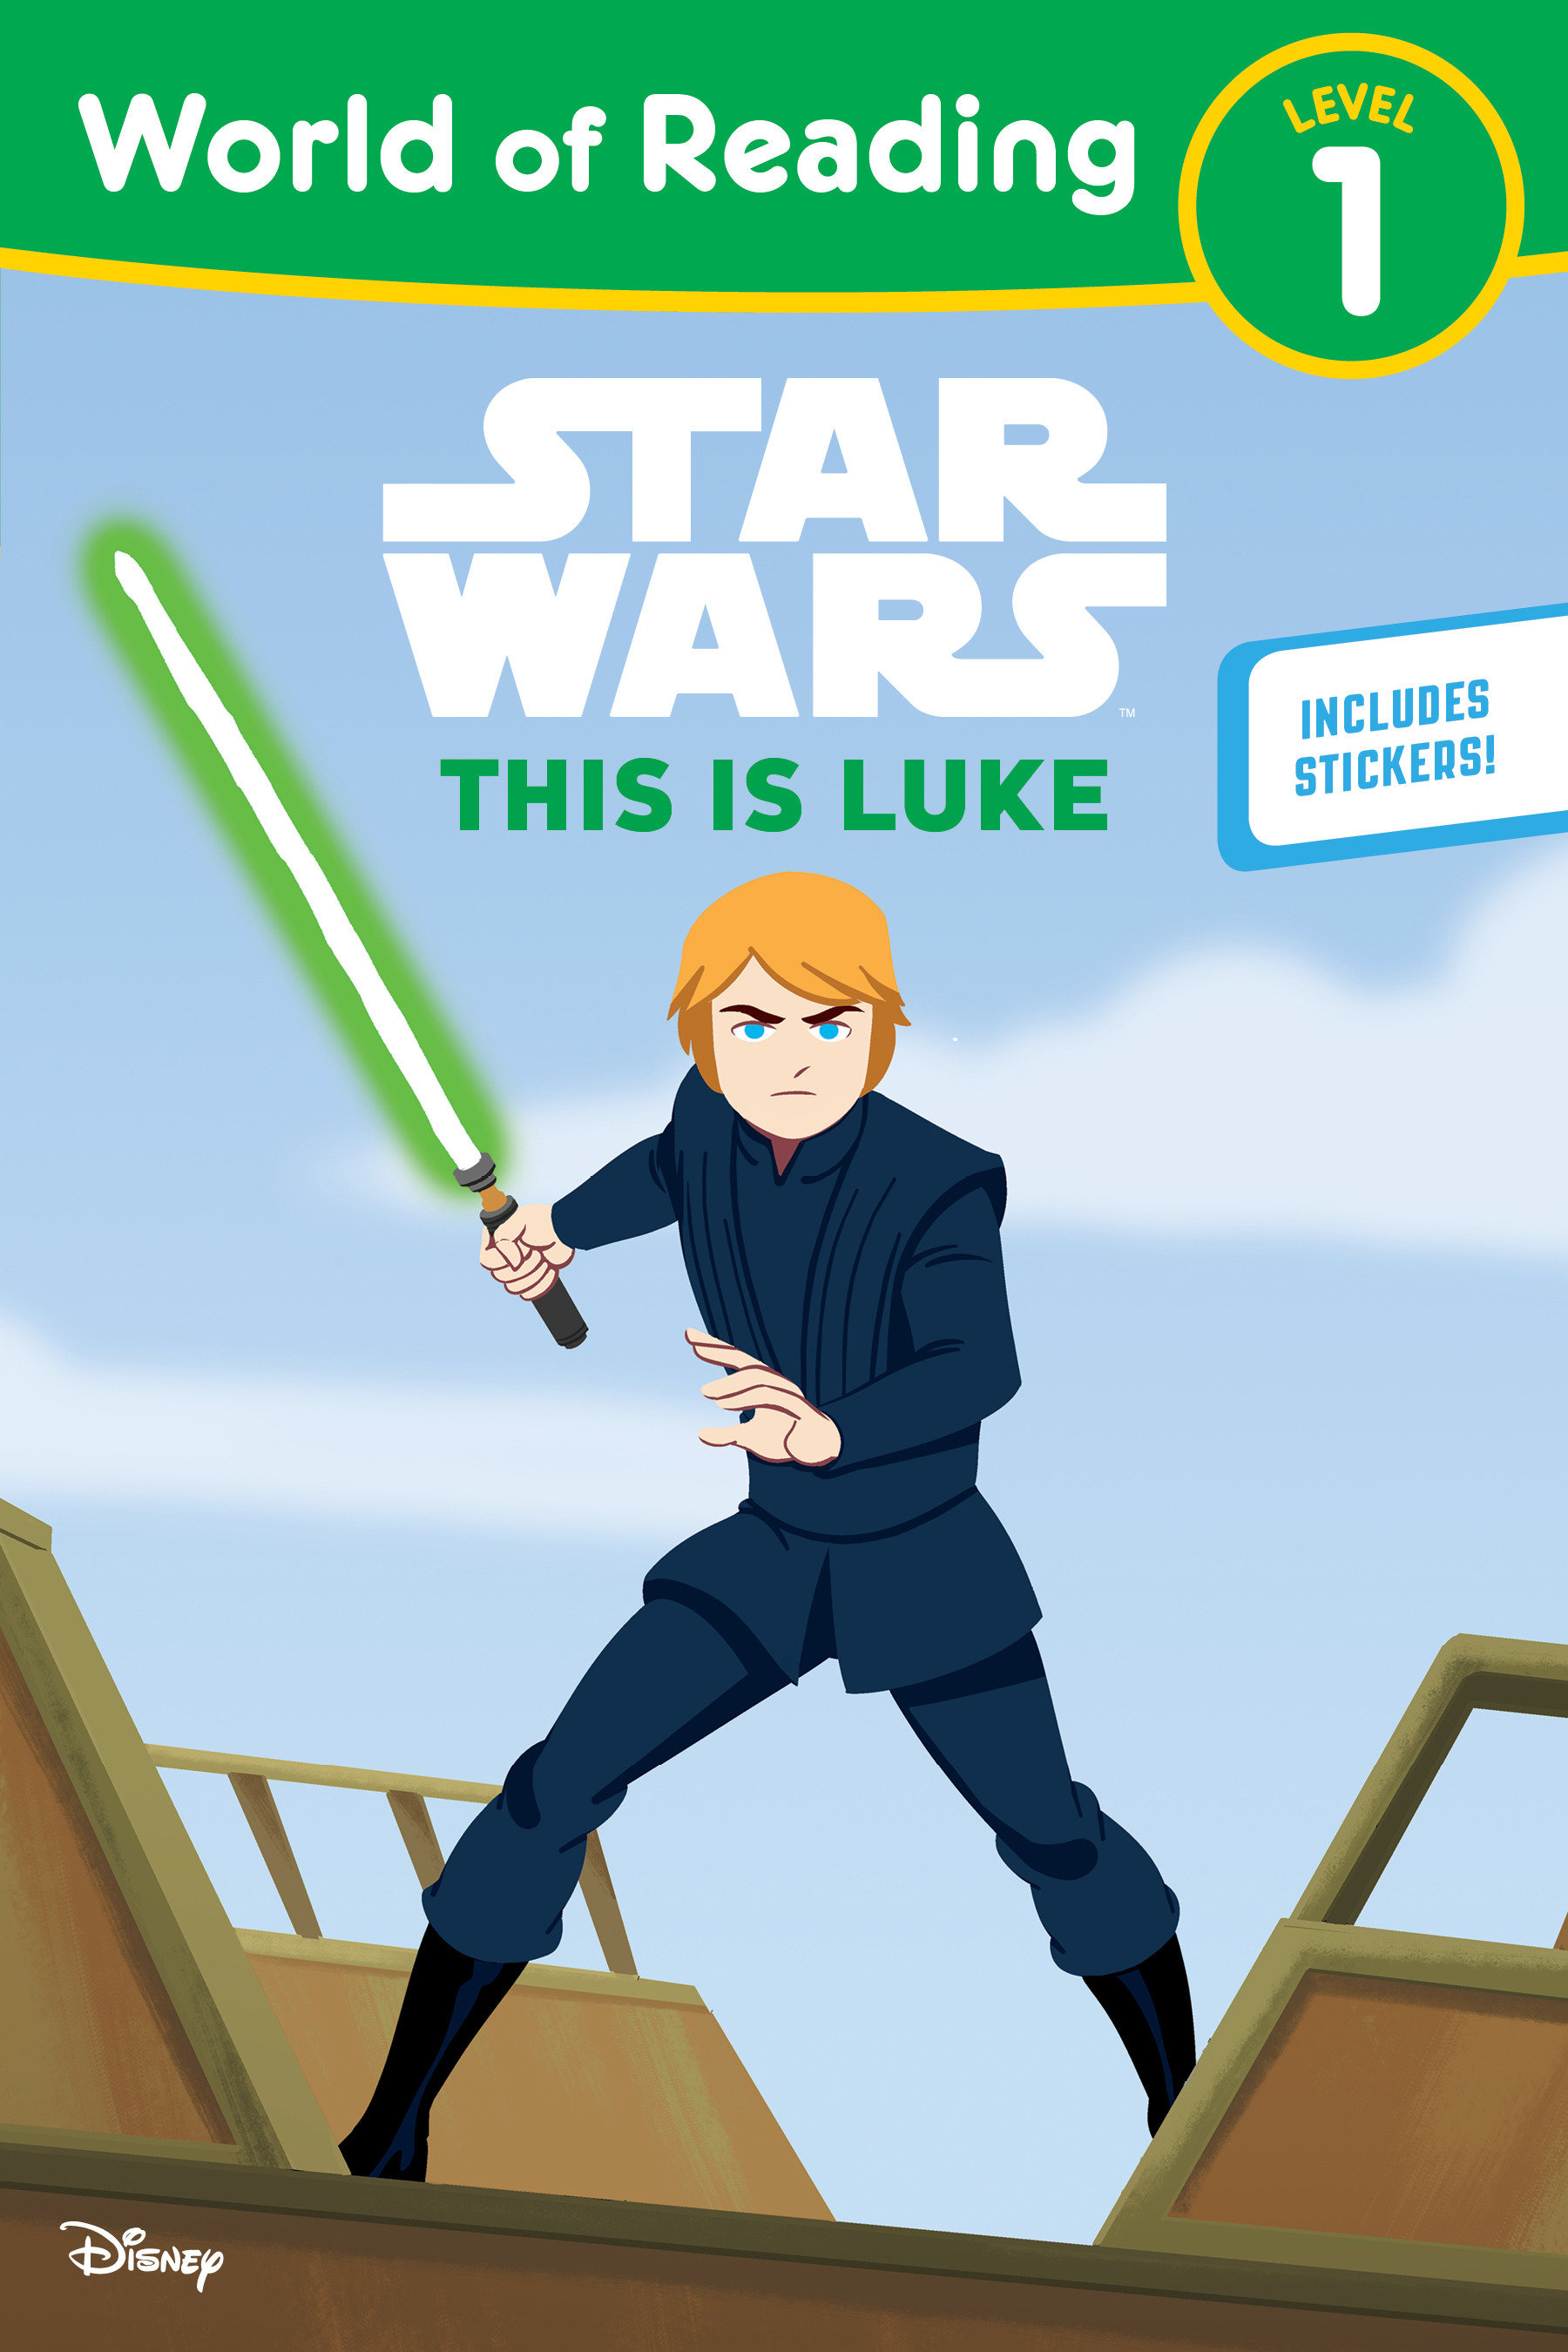 World of Reading: Star Wars - This Is Luke